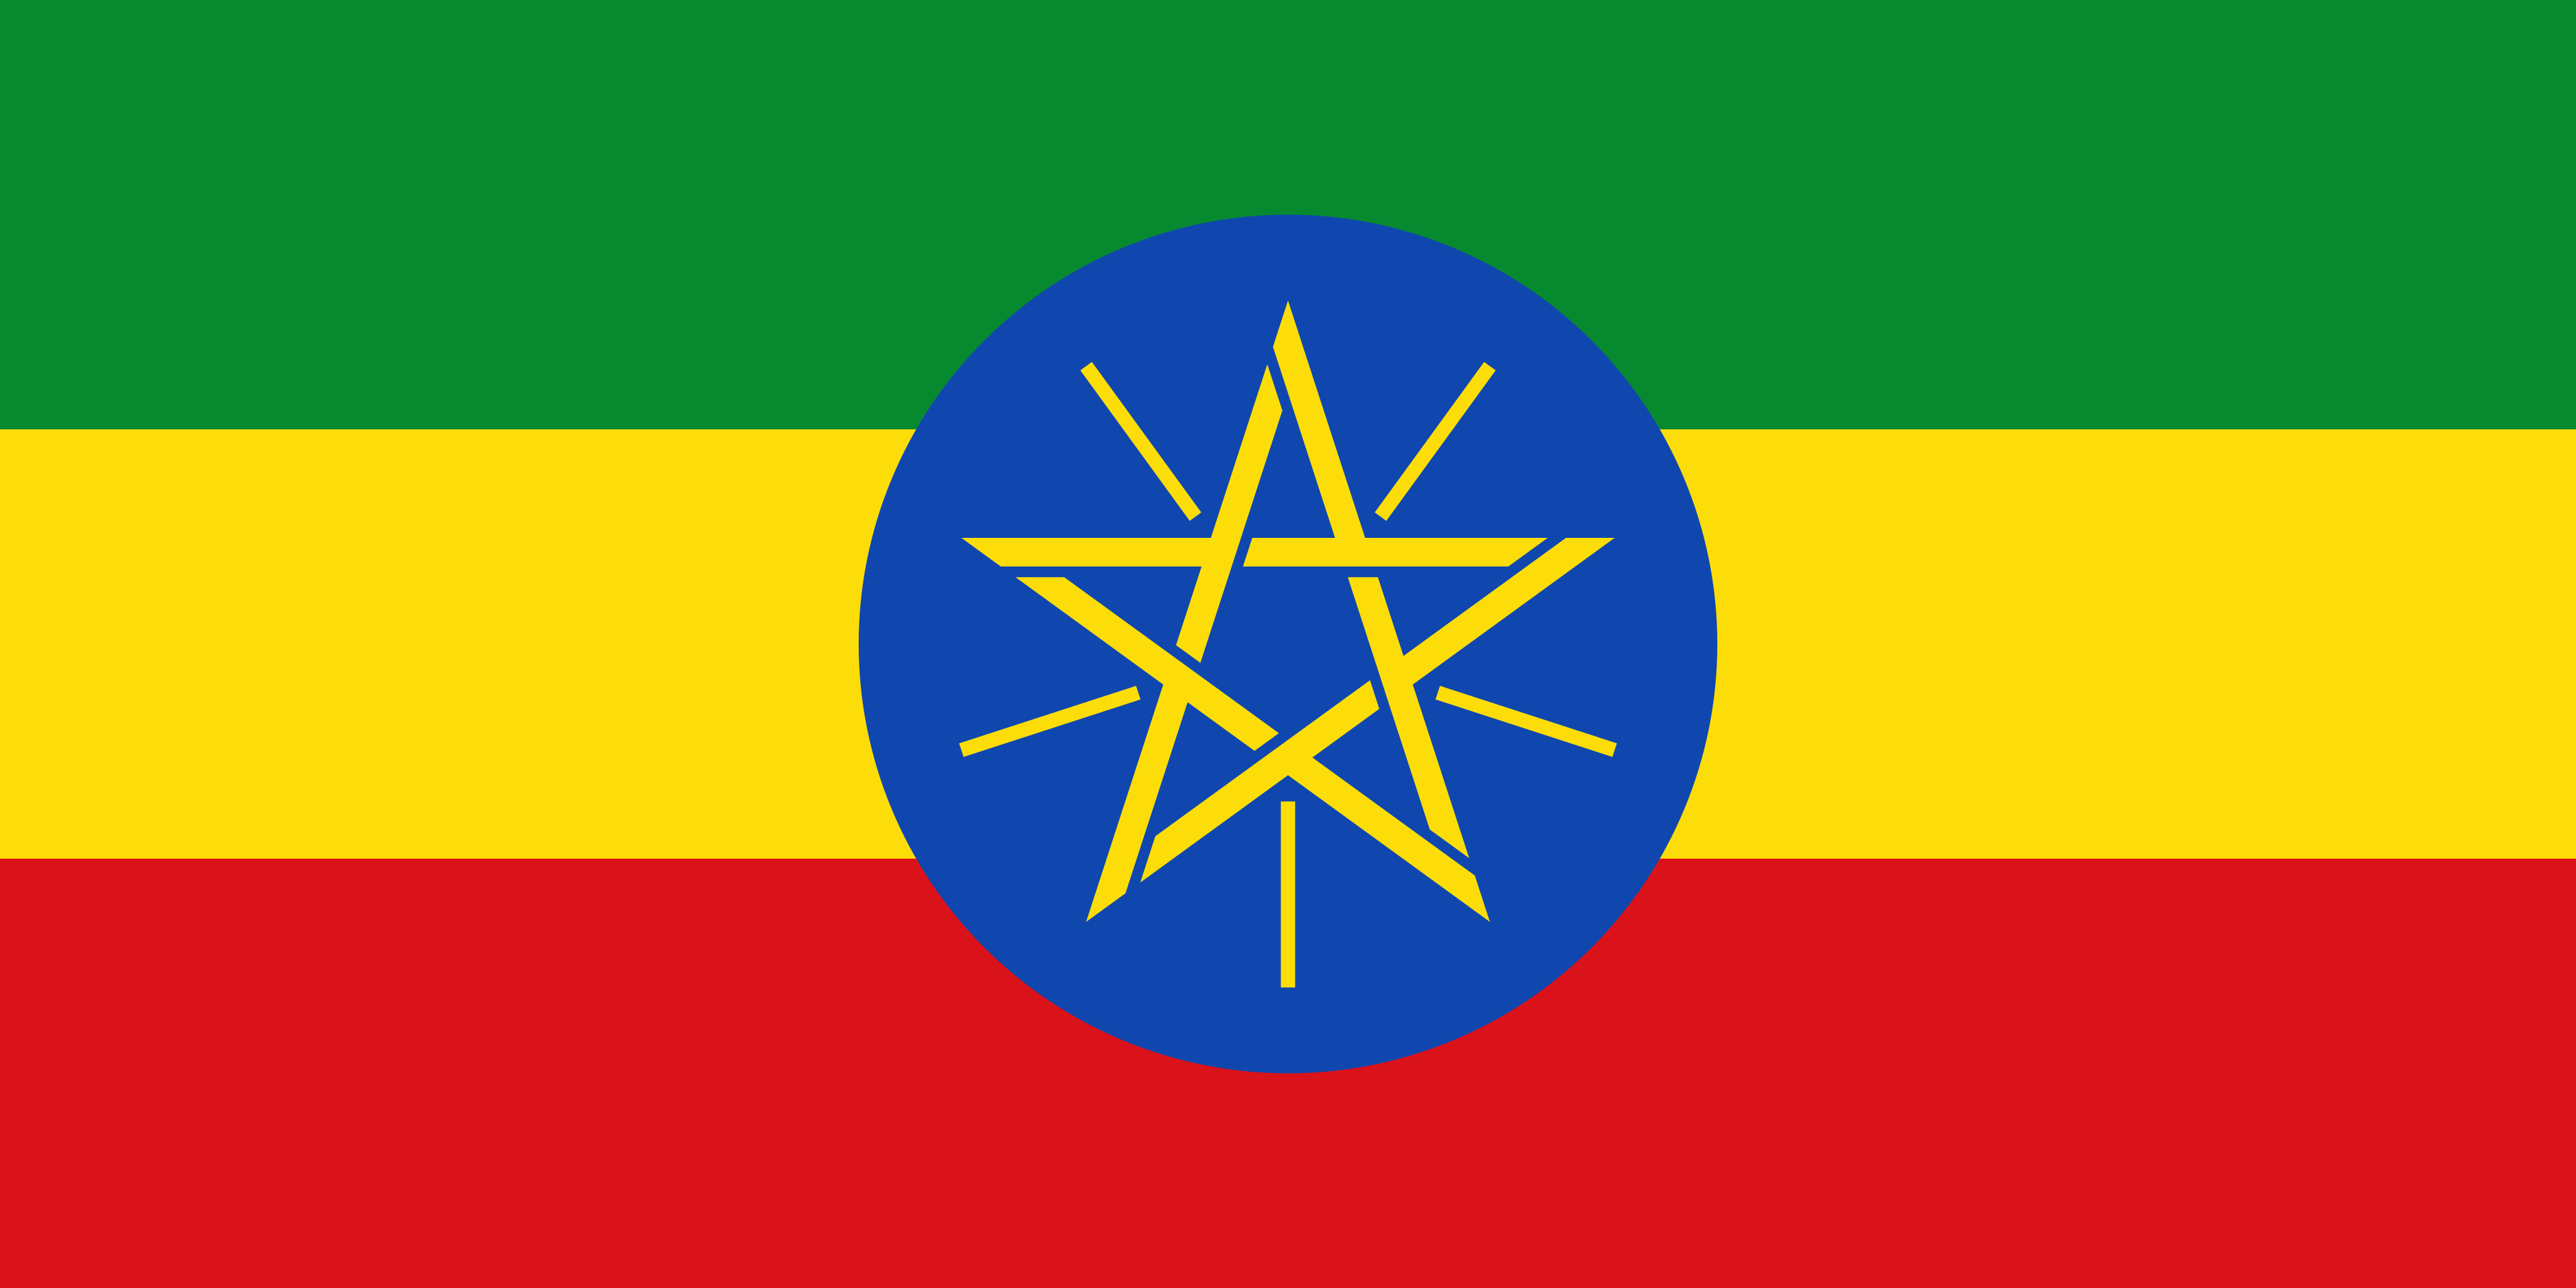 Ethiopia Flag Image - Free Download